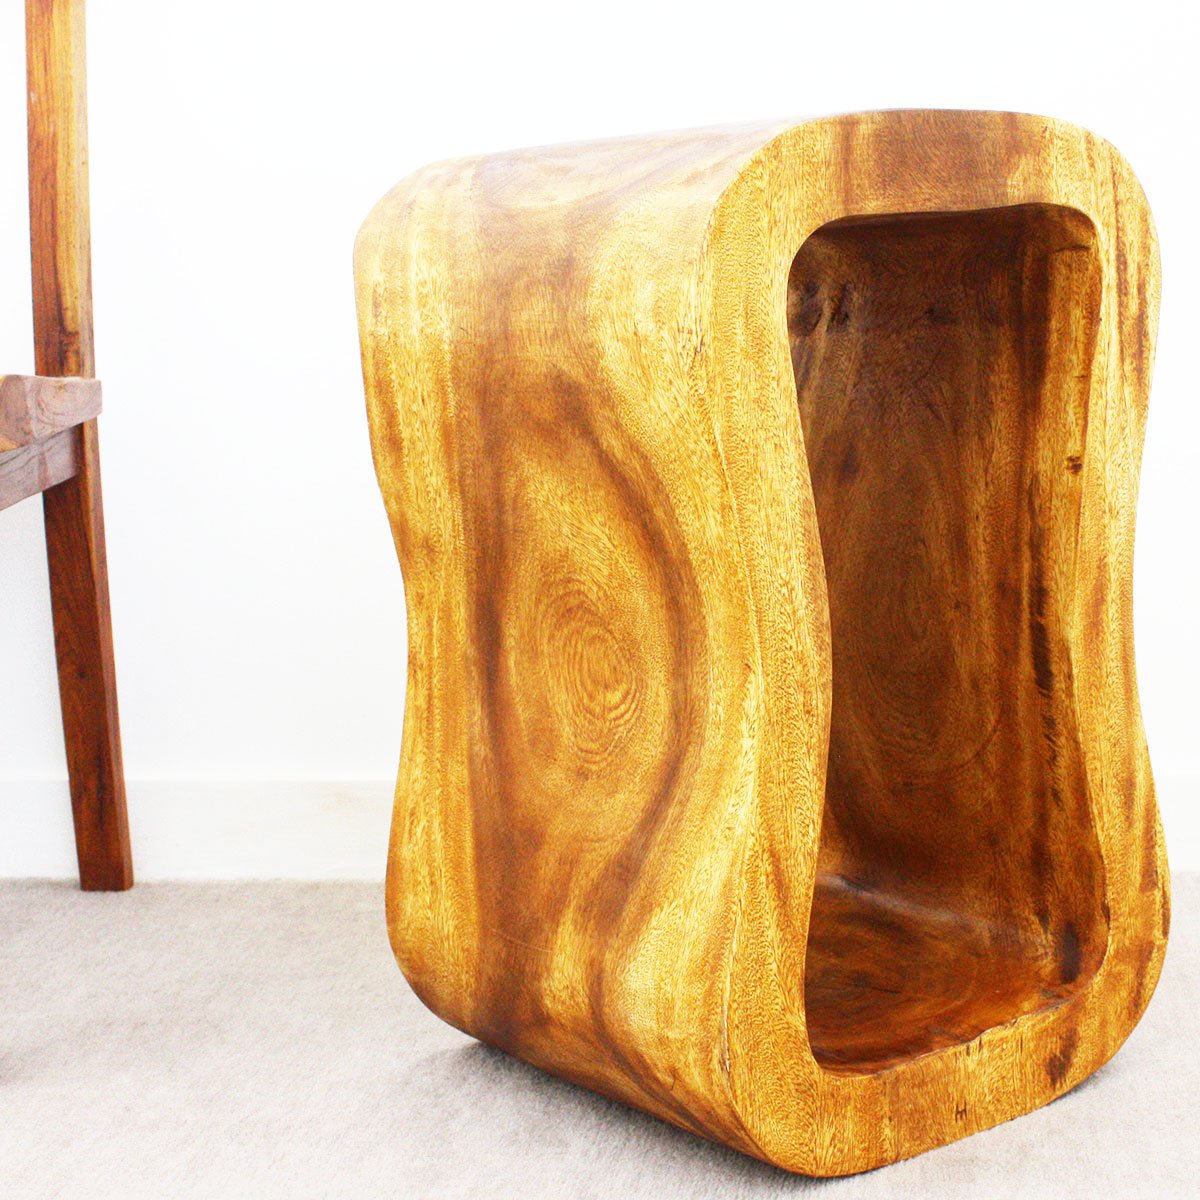 Haussmann® Wood Wave Bench 24 in x 13.5 x 15 inch High Oak Oil